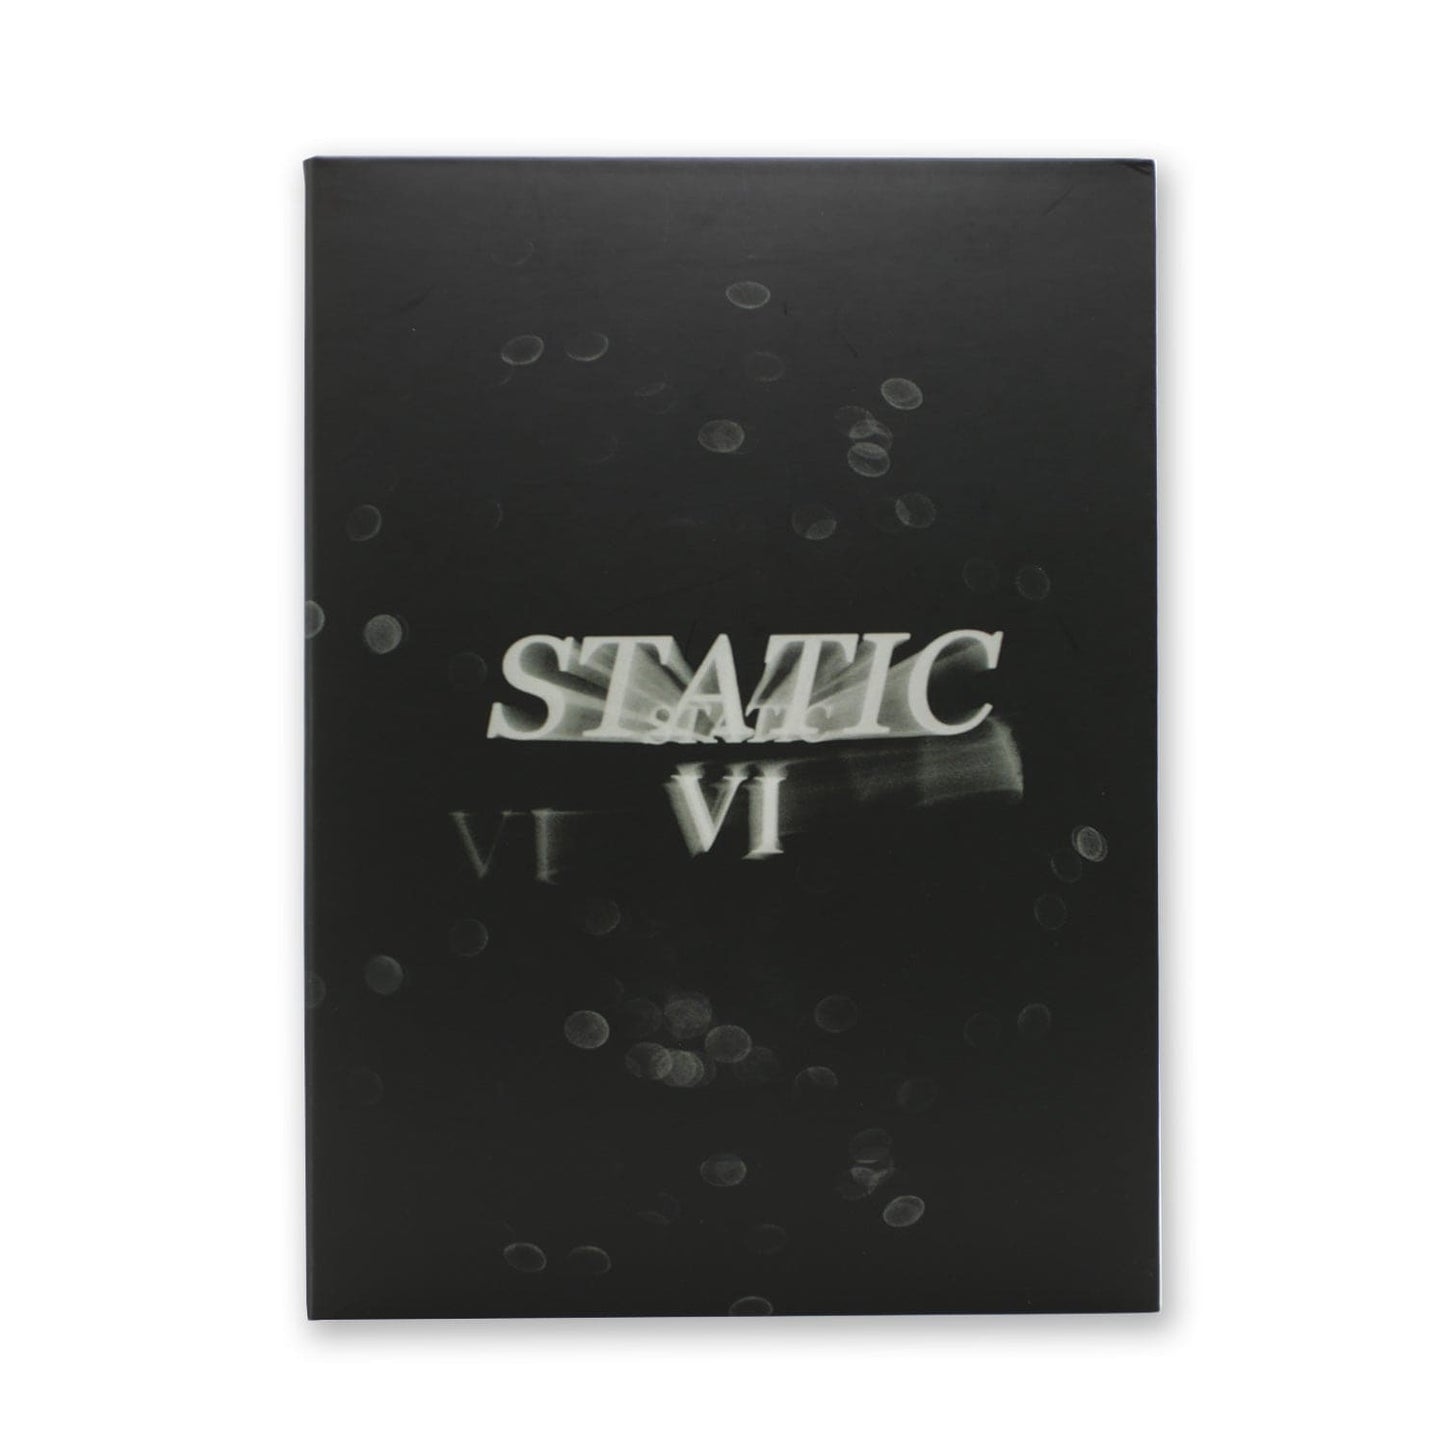 Static VI DVD by Josh Stewart